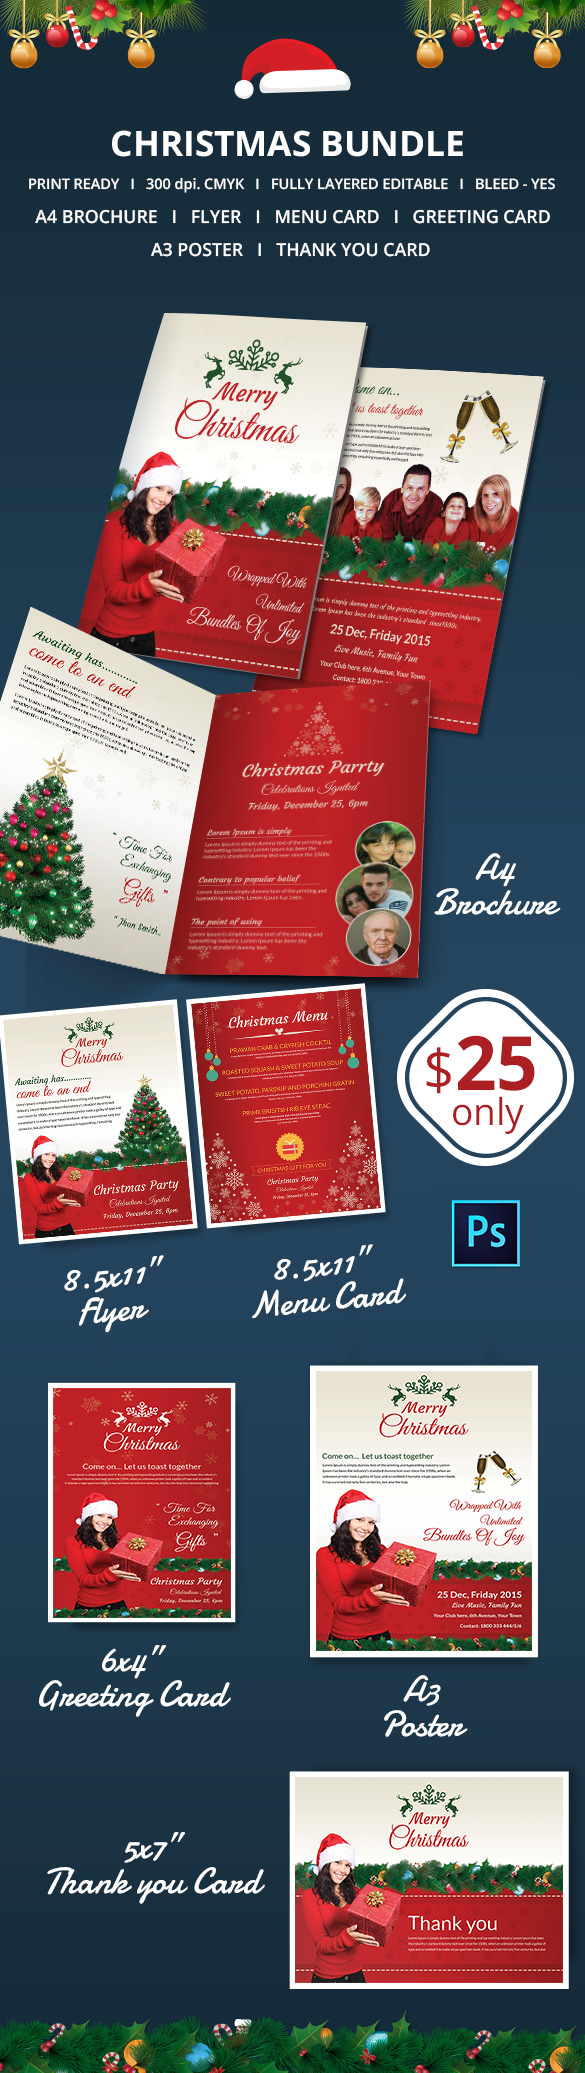 41+ Christmas Brochures Templates - Psd, Word, Publisher With Regard To Christmas Brochure Templates Free